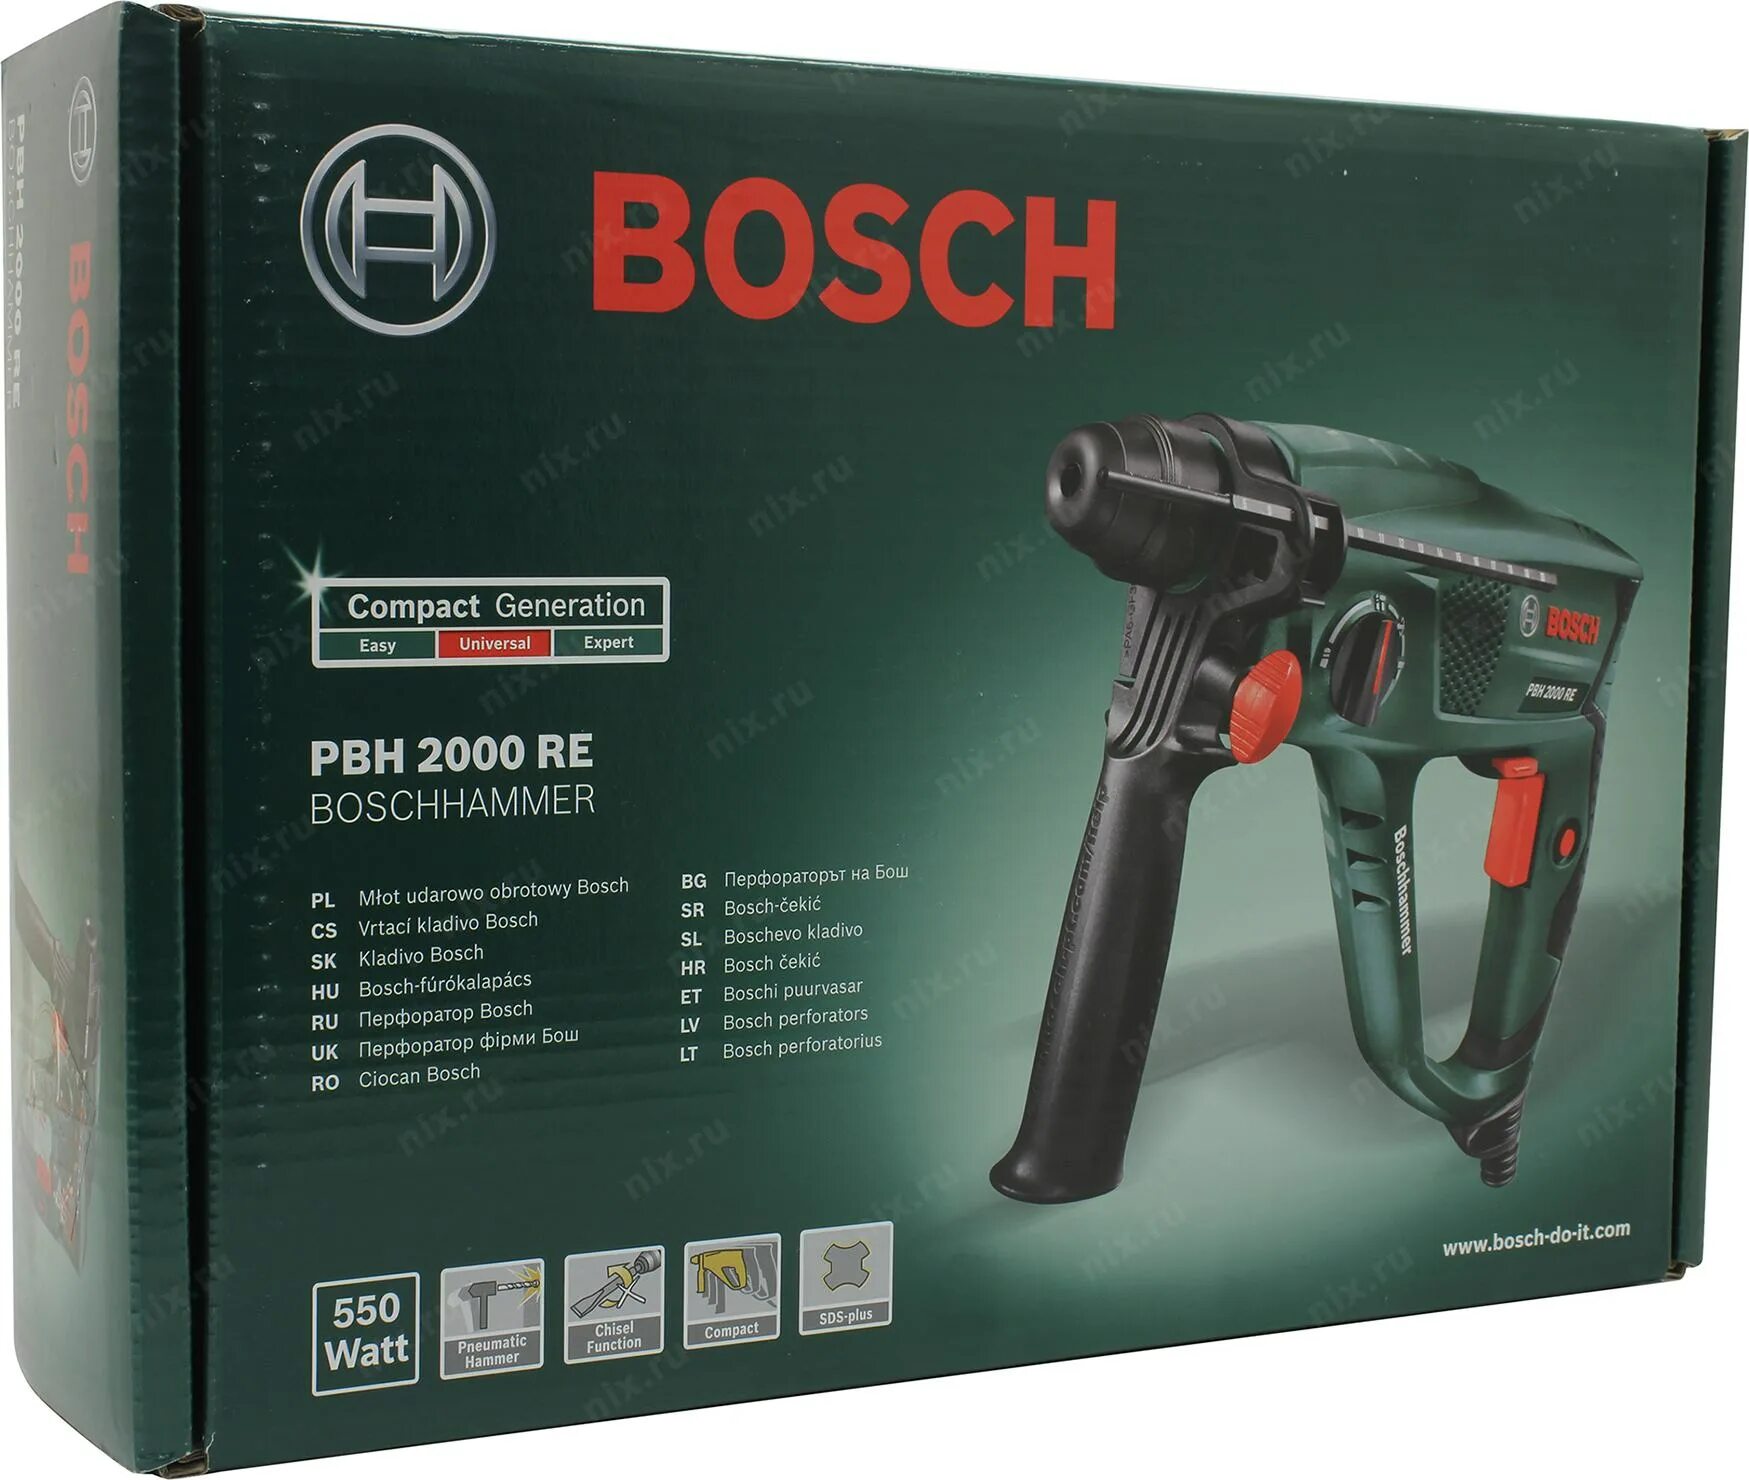 Bosch PBH 2000 re. Перфоратор бош PBH 2000 re. Ked ati50 кнопка перфоратор вош PBH 2000re. Bosch PBH 2000 SRE, 550 Вт.